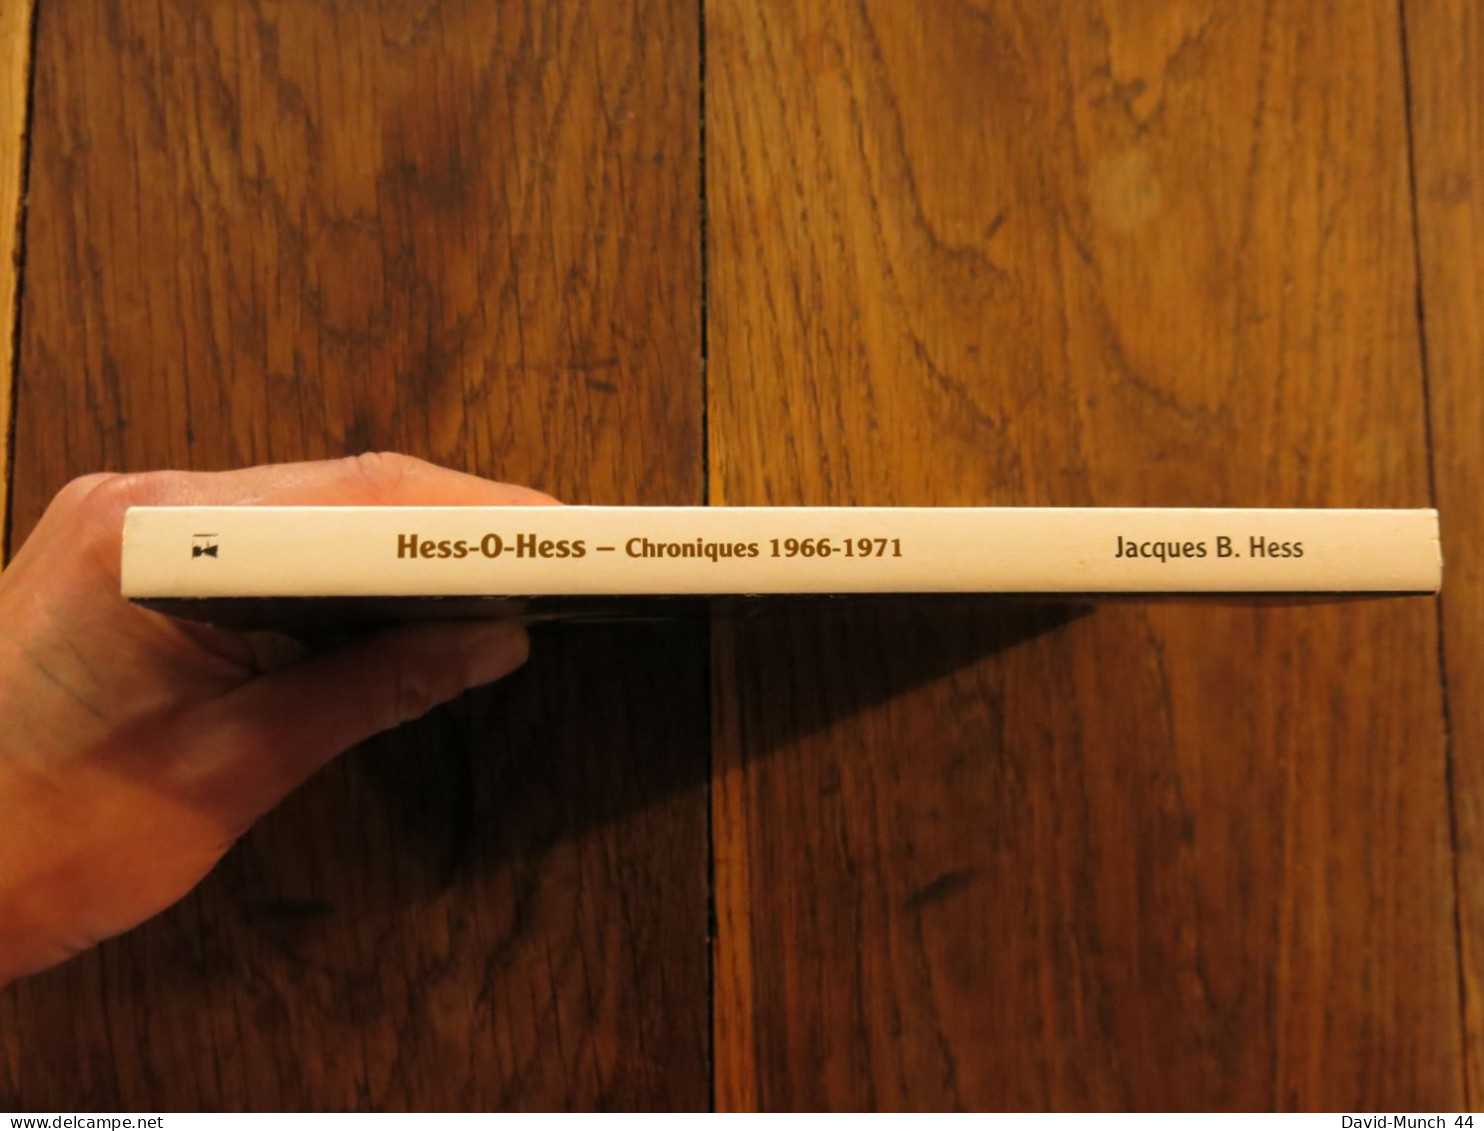 Hess-O-Hess, Chroniques 1966-1971 De Jacques B. Hess. Alter Ego éditions, Jazz Impressions. 2013 - Musica